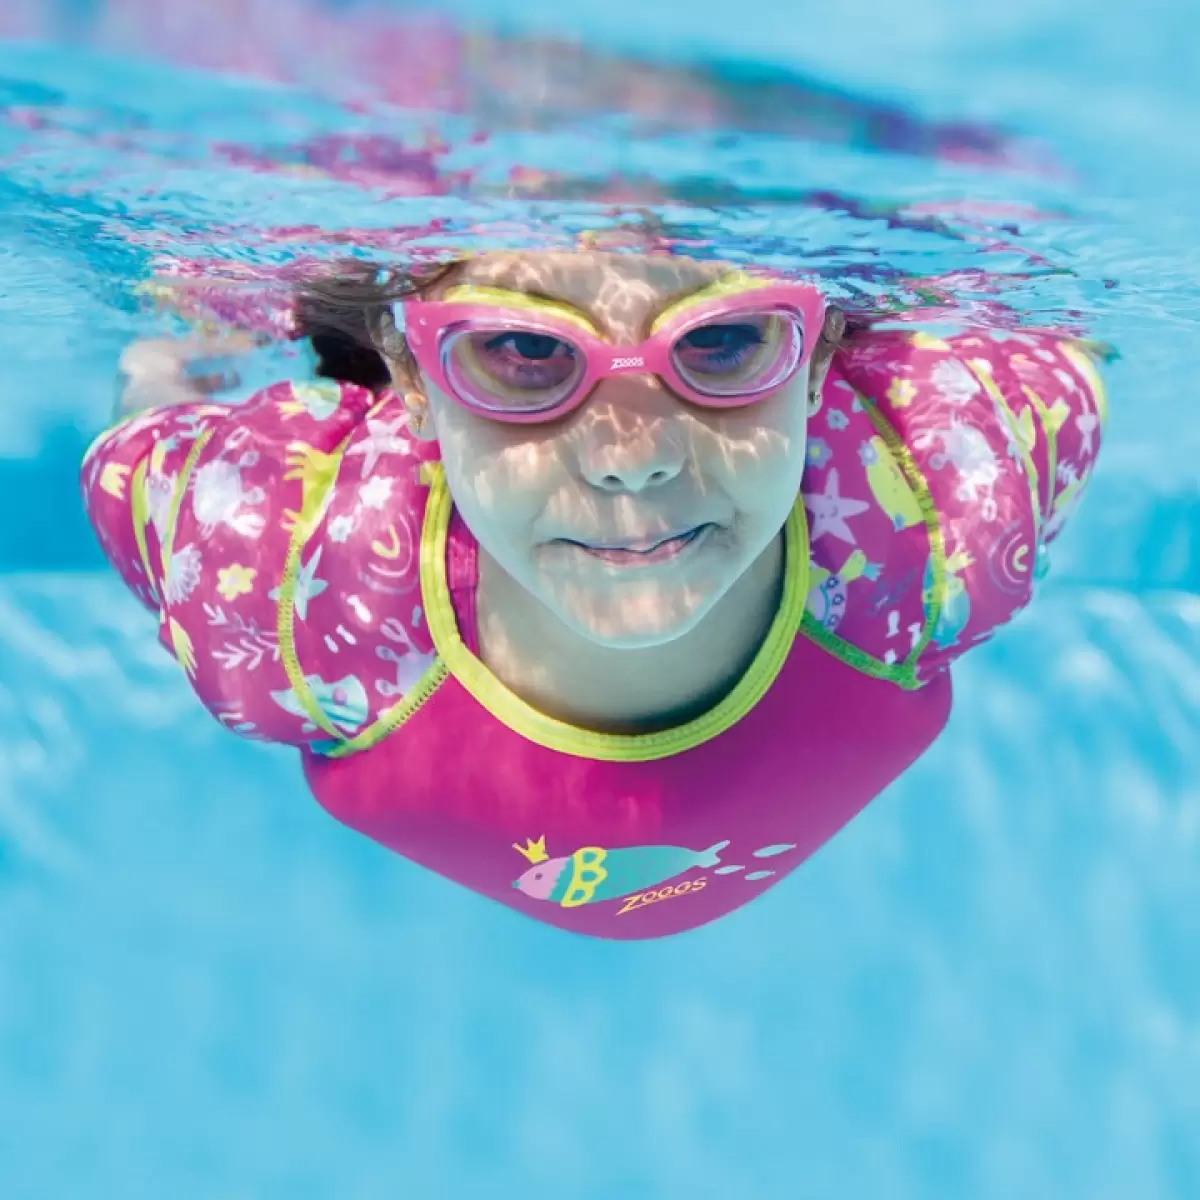 Kids Learn To Swim Float Suits, Buoyancy Suits